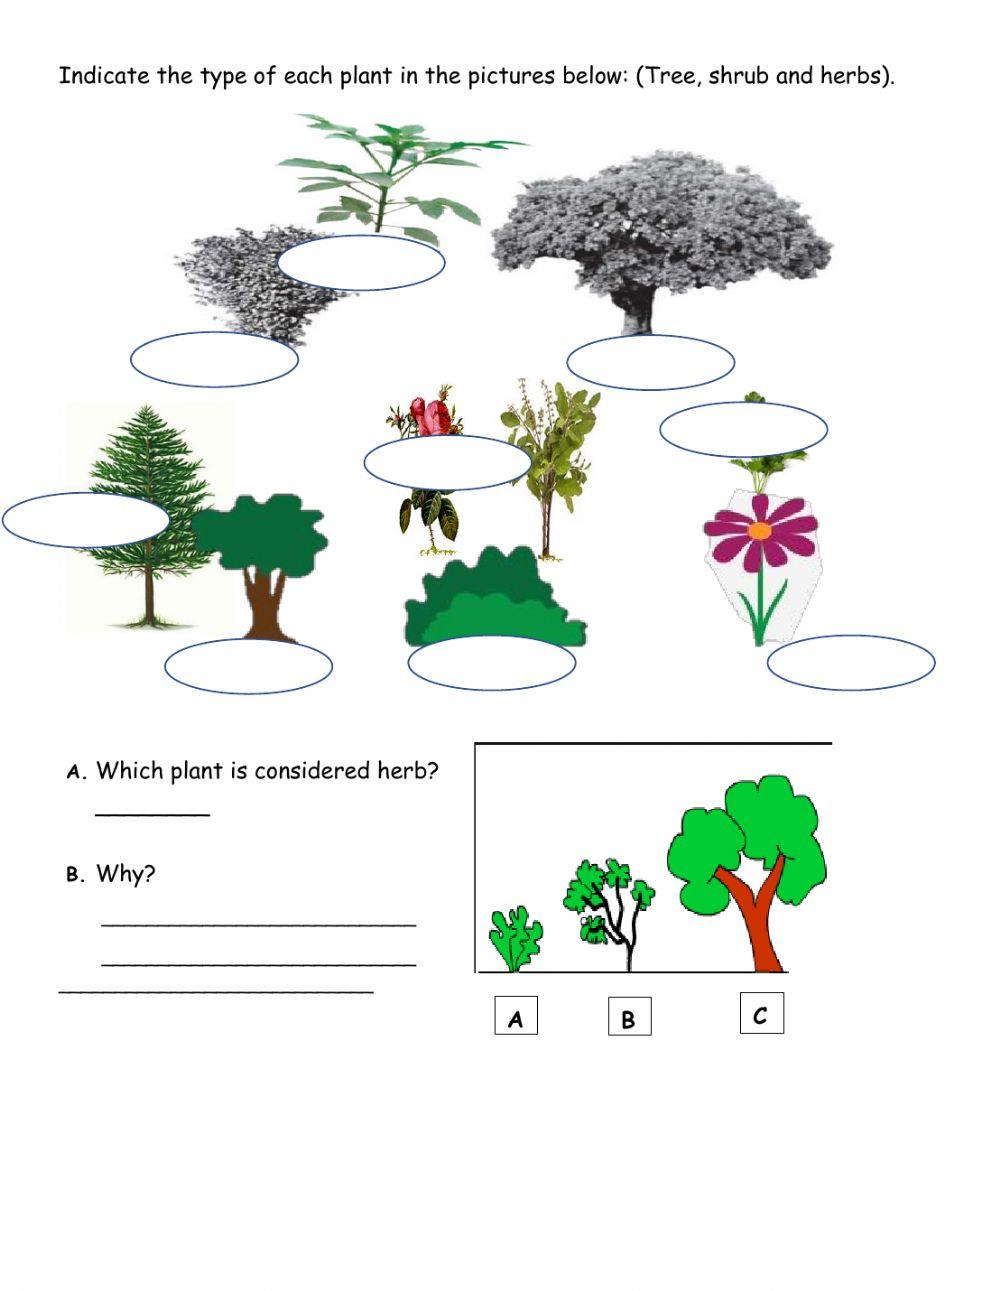 Tree,shrub and herbs